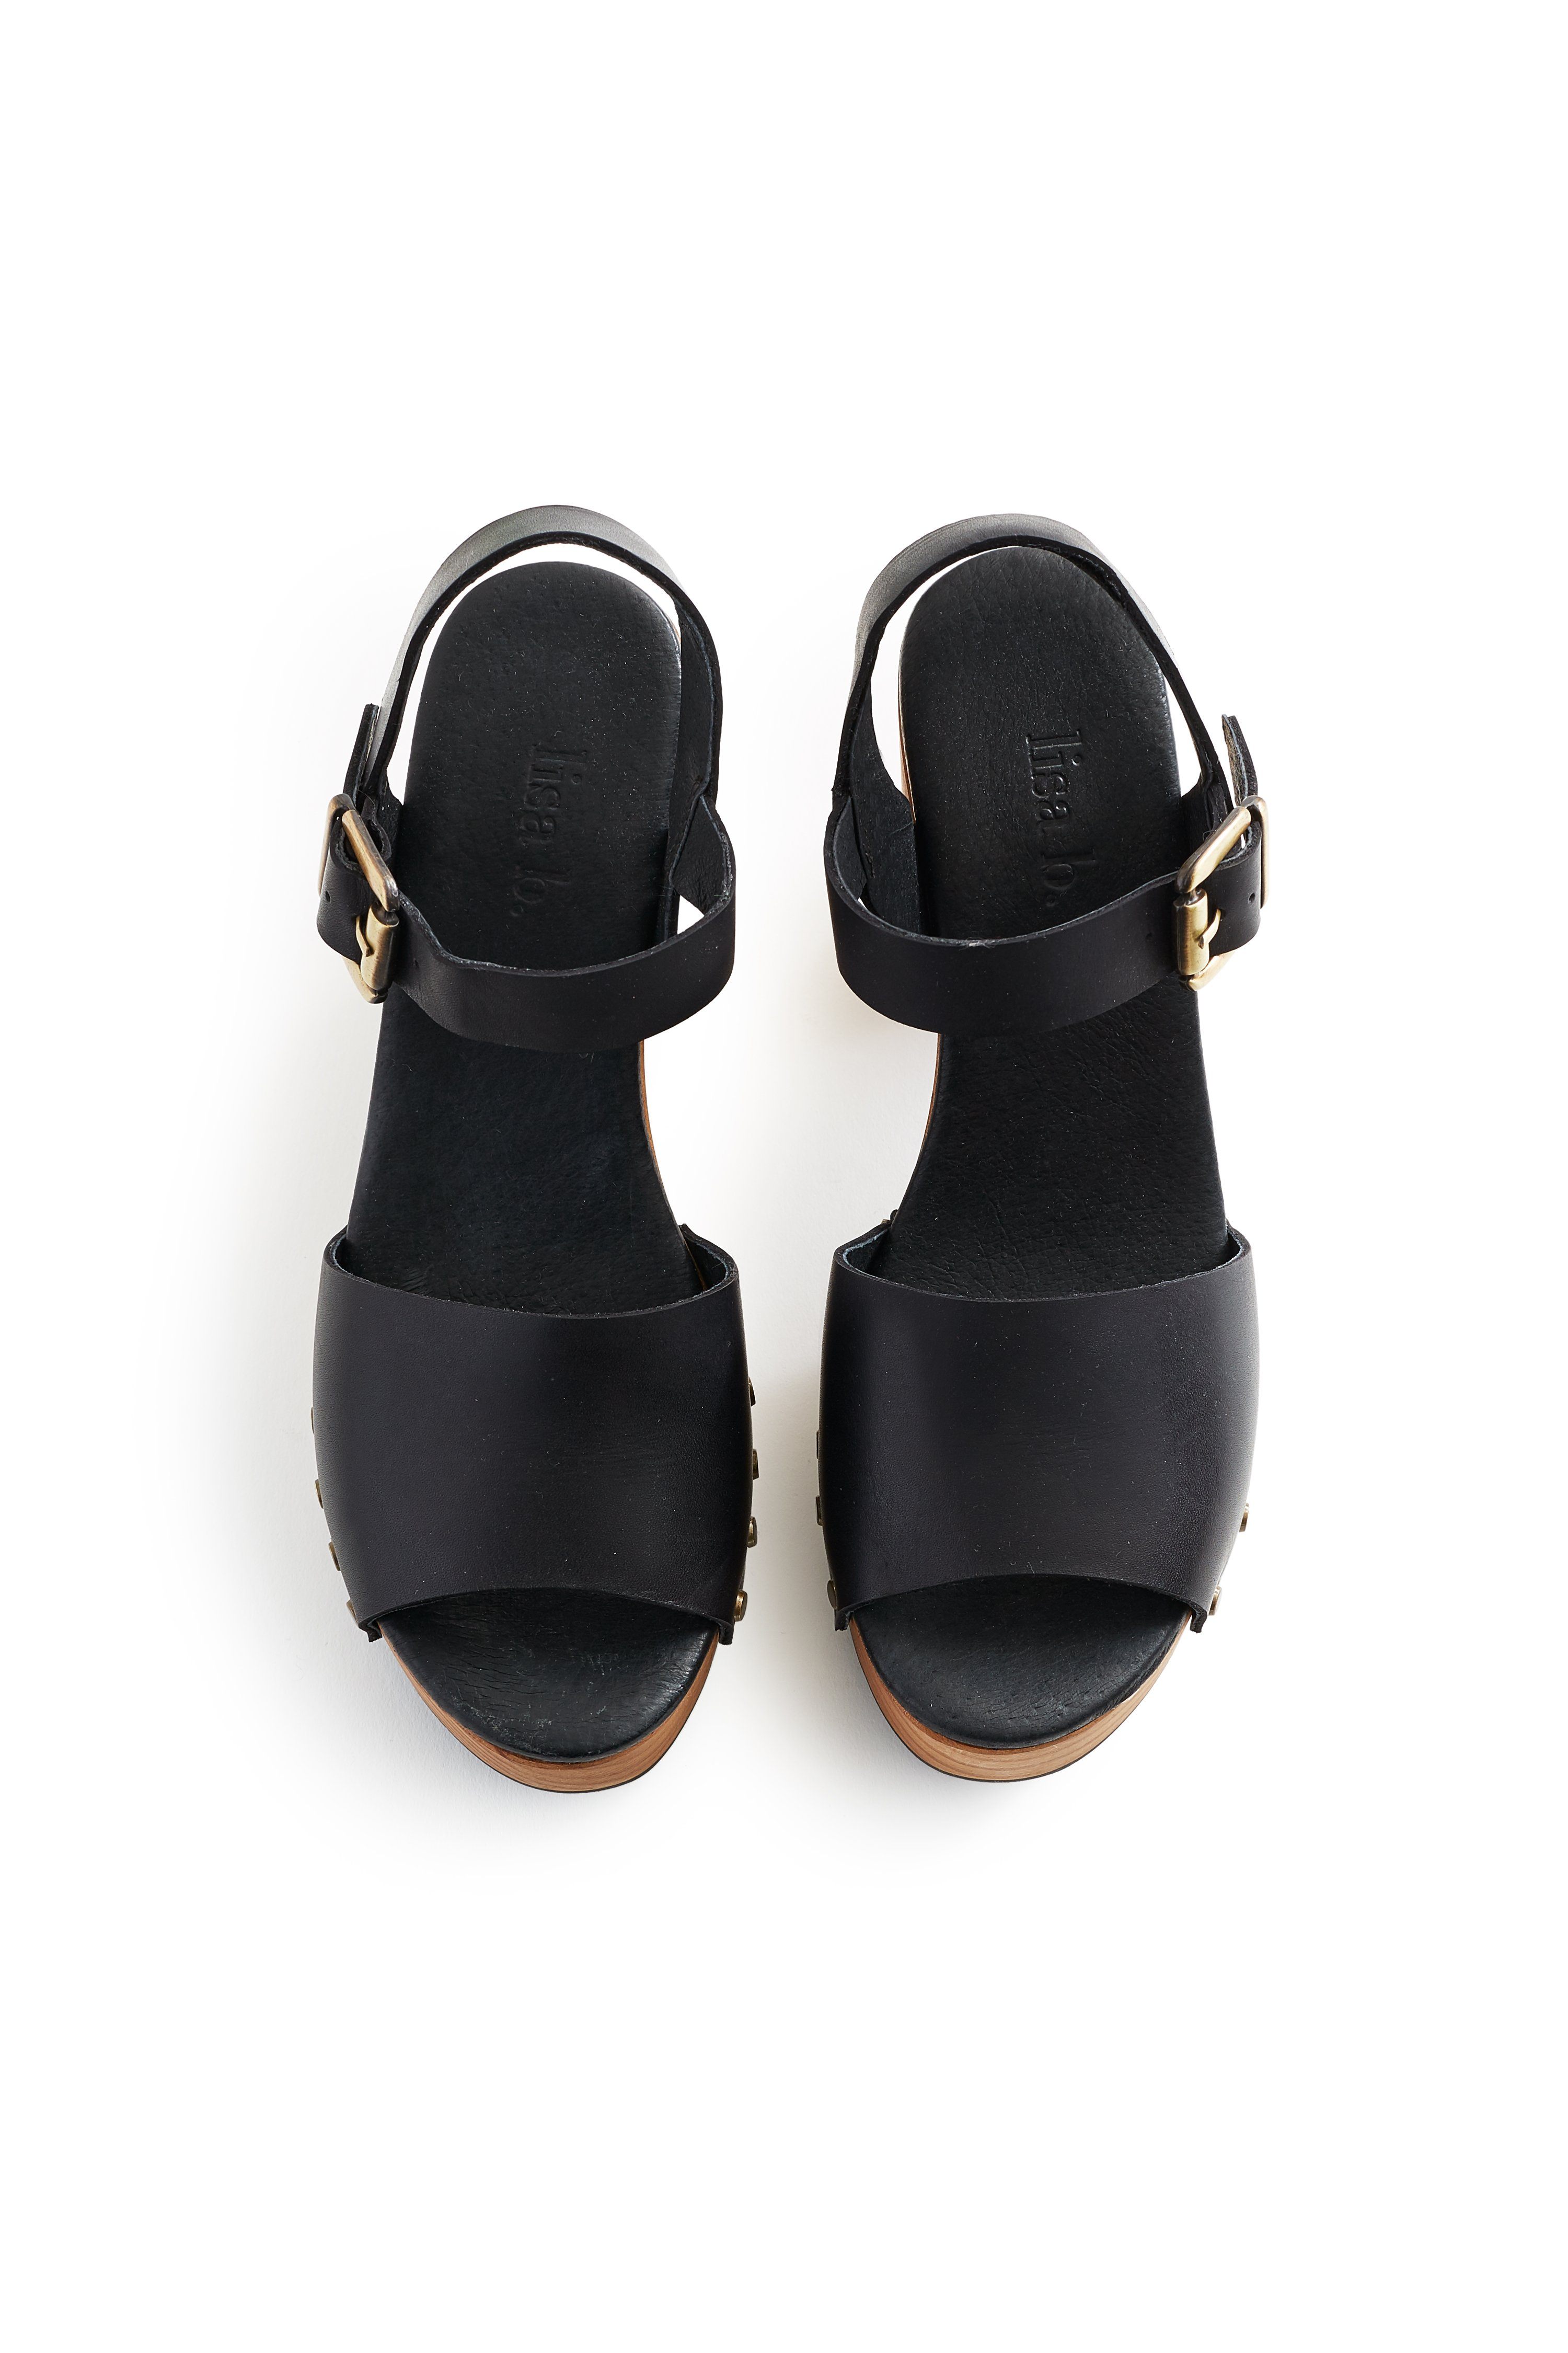 platform leather clogs in black Clogs lisa b. 